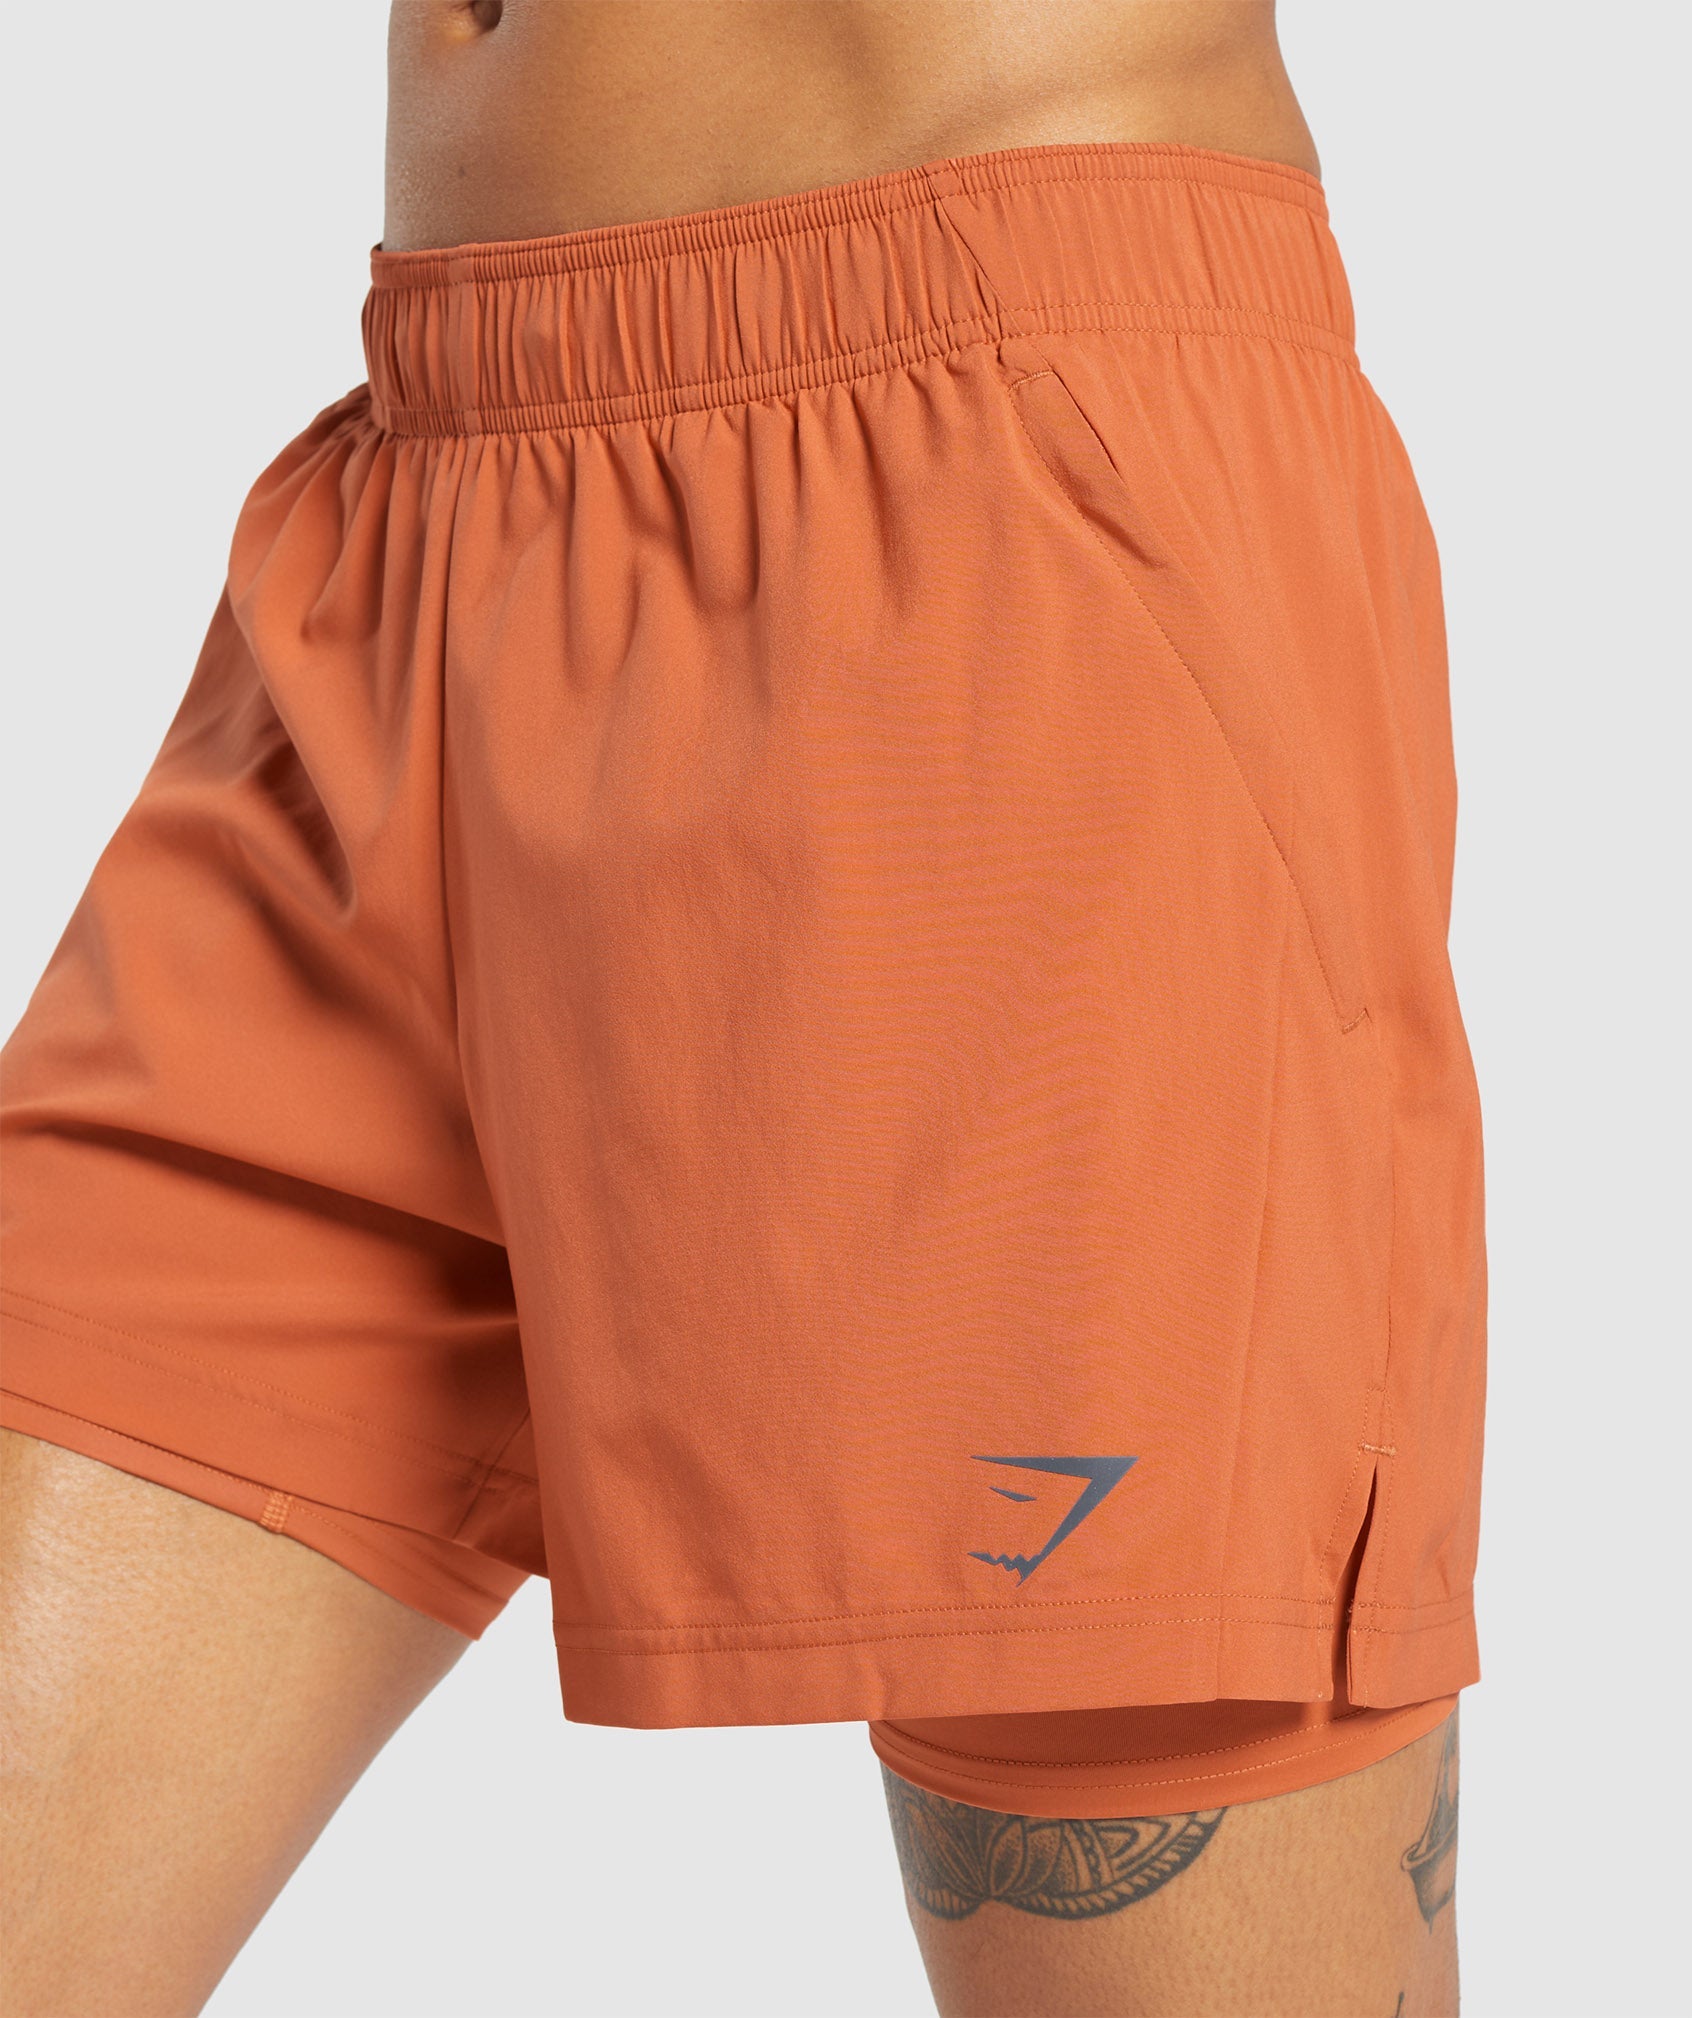 Sport 5" 2 in 1 Shorts in Muted Orange/Muted Orange - view 6